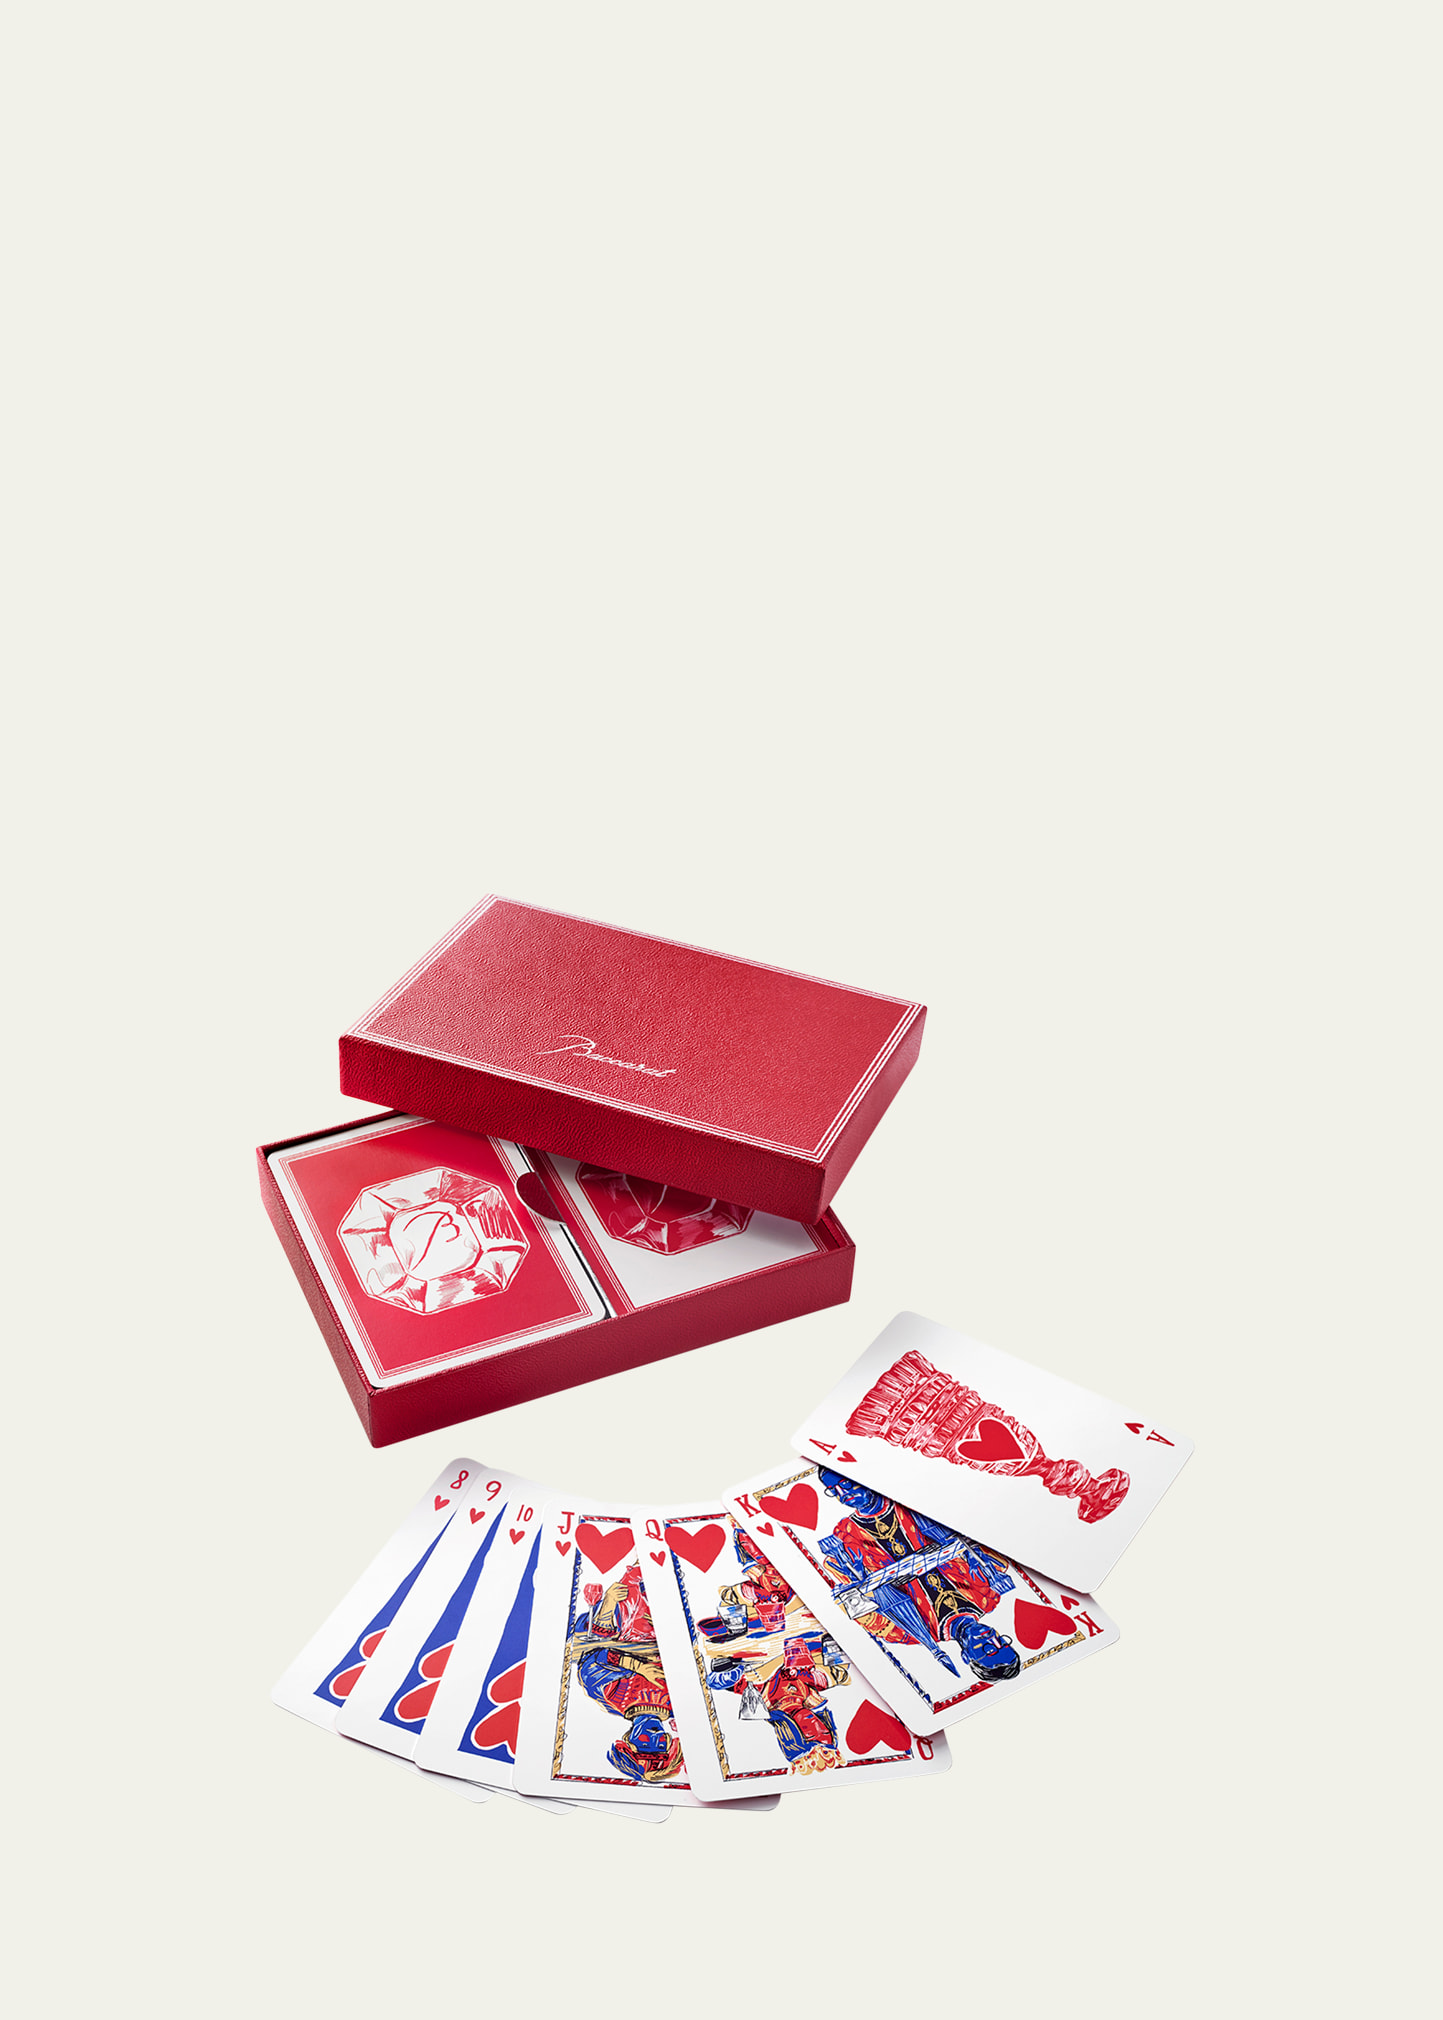 Poker Card Game